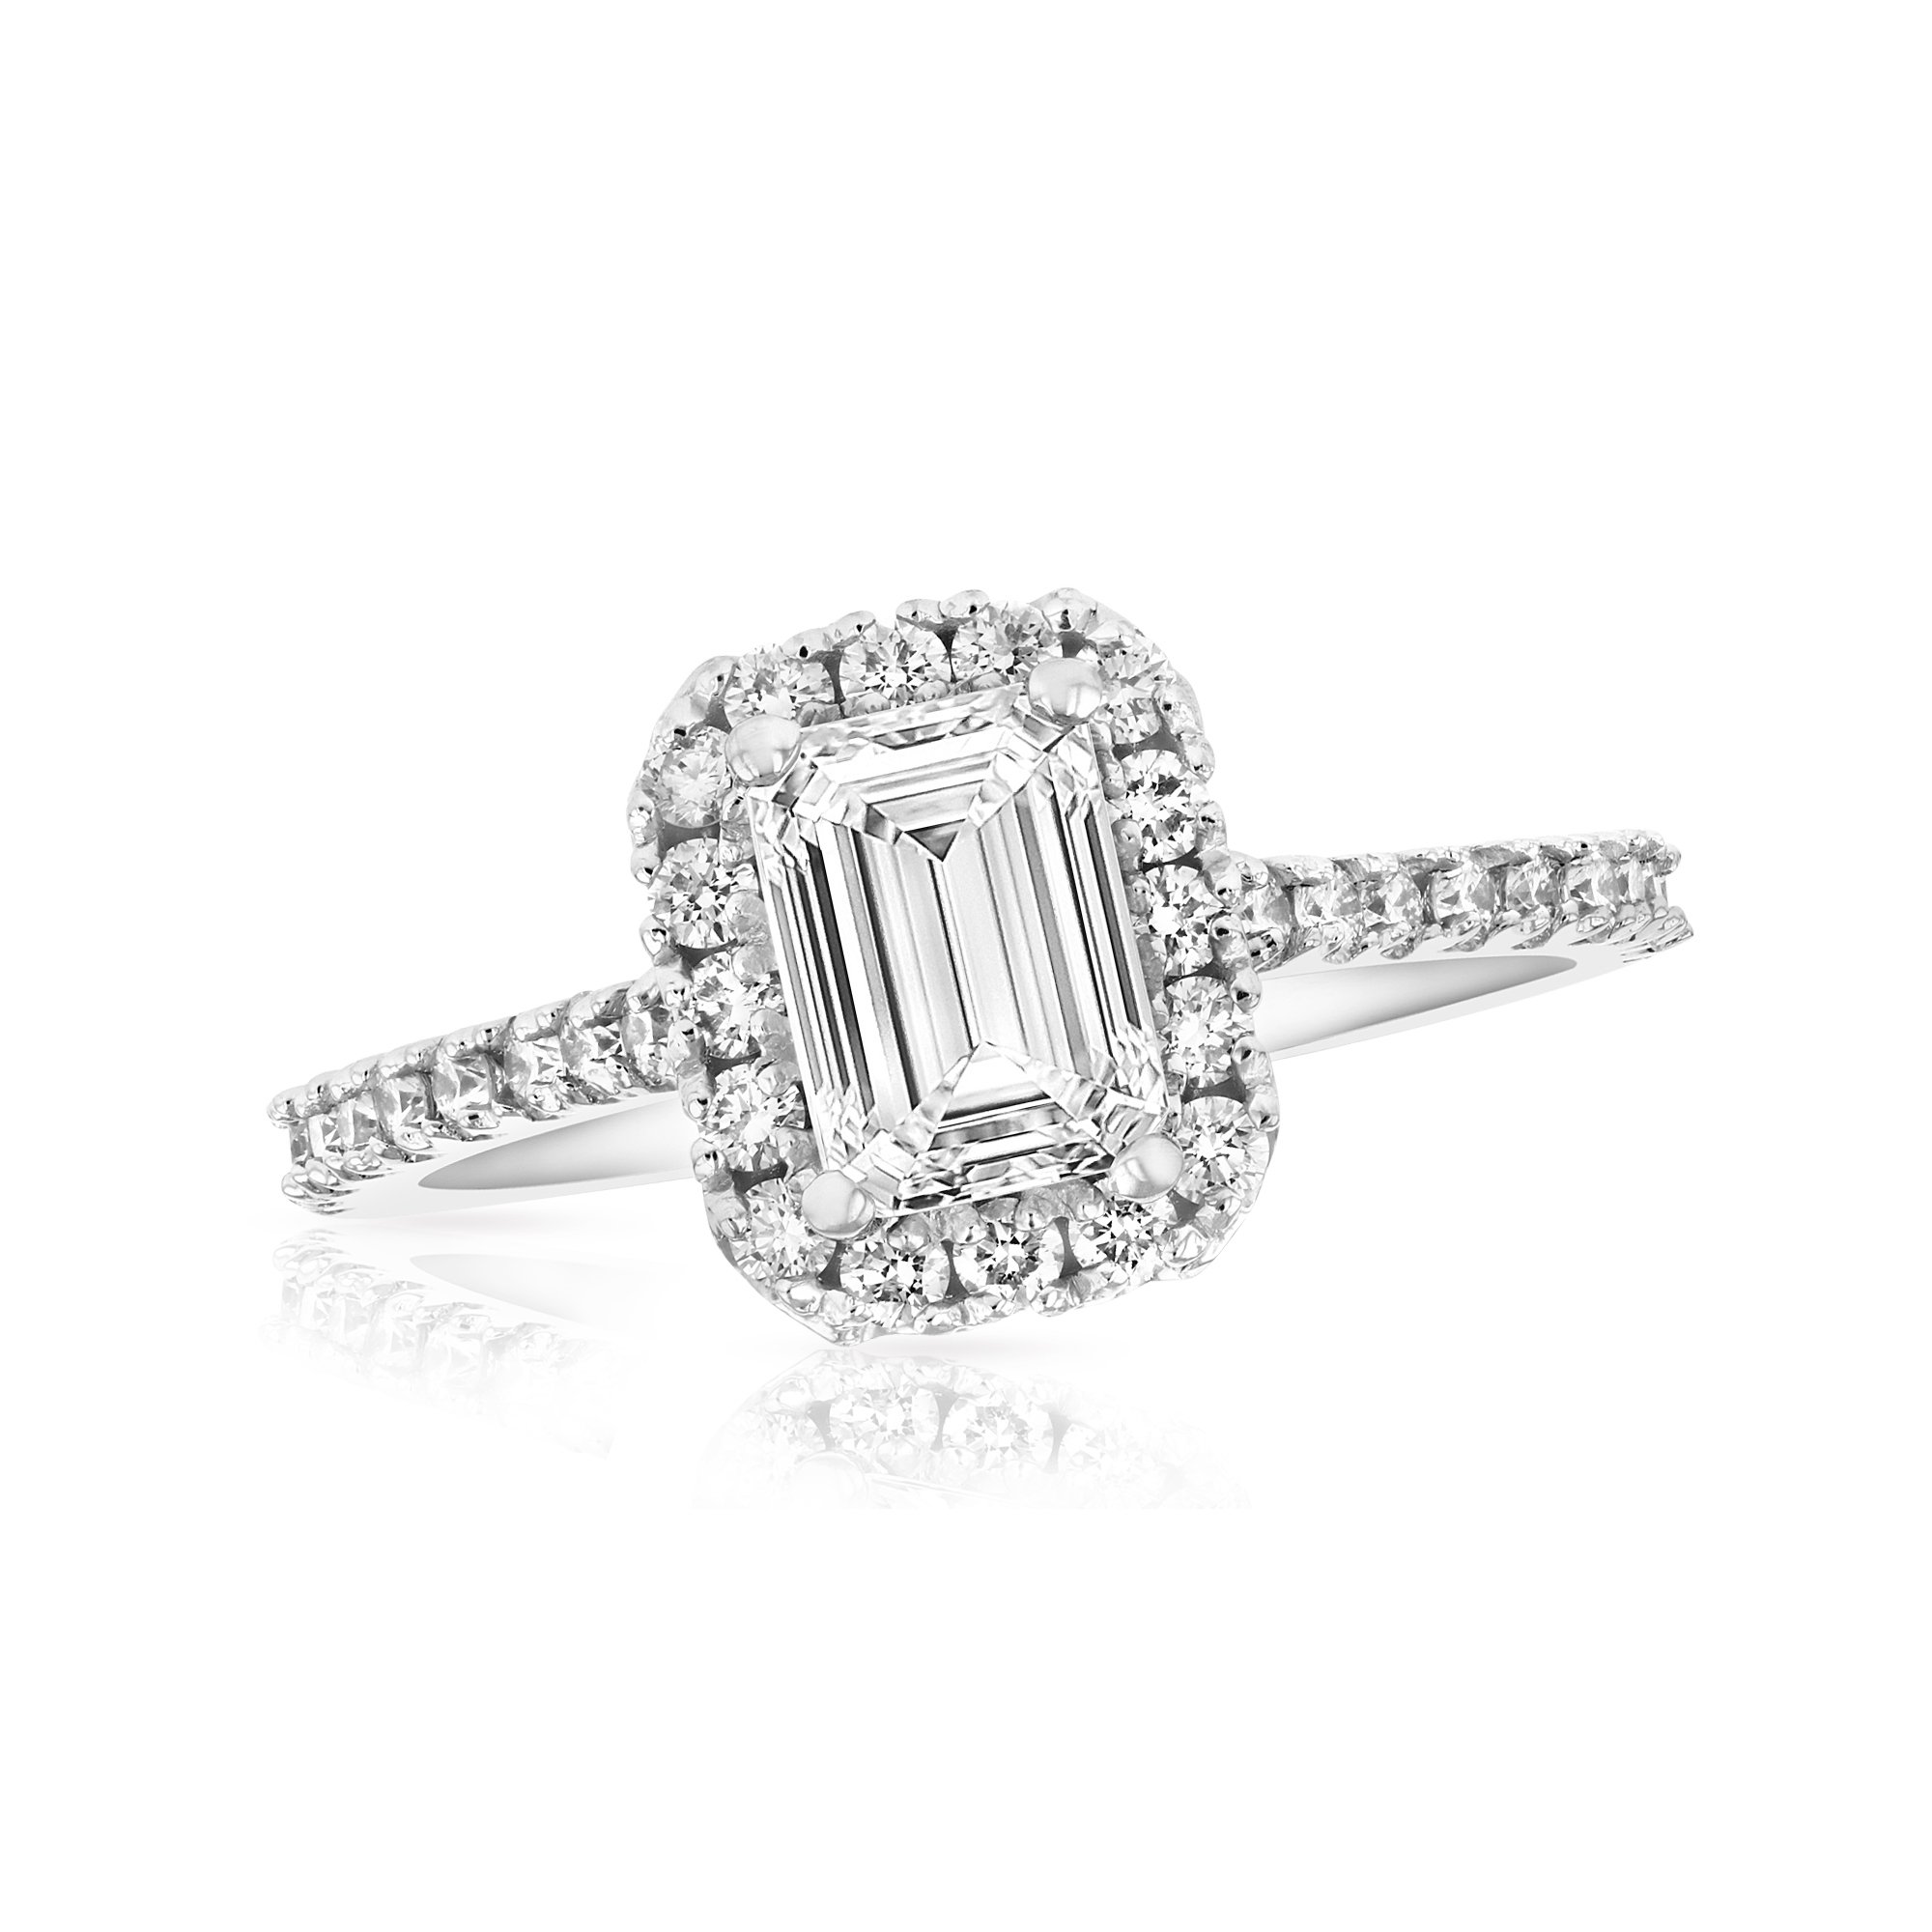 View 0.48ctw Diamond Emerald Cut Halo Semi Mount Ring in 14k White Gold